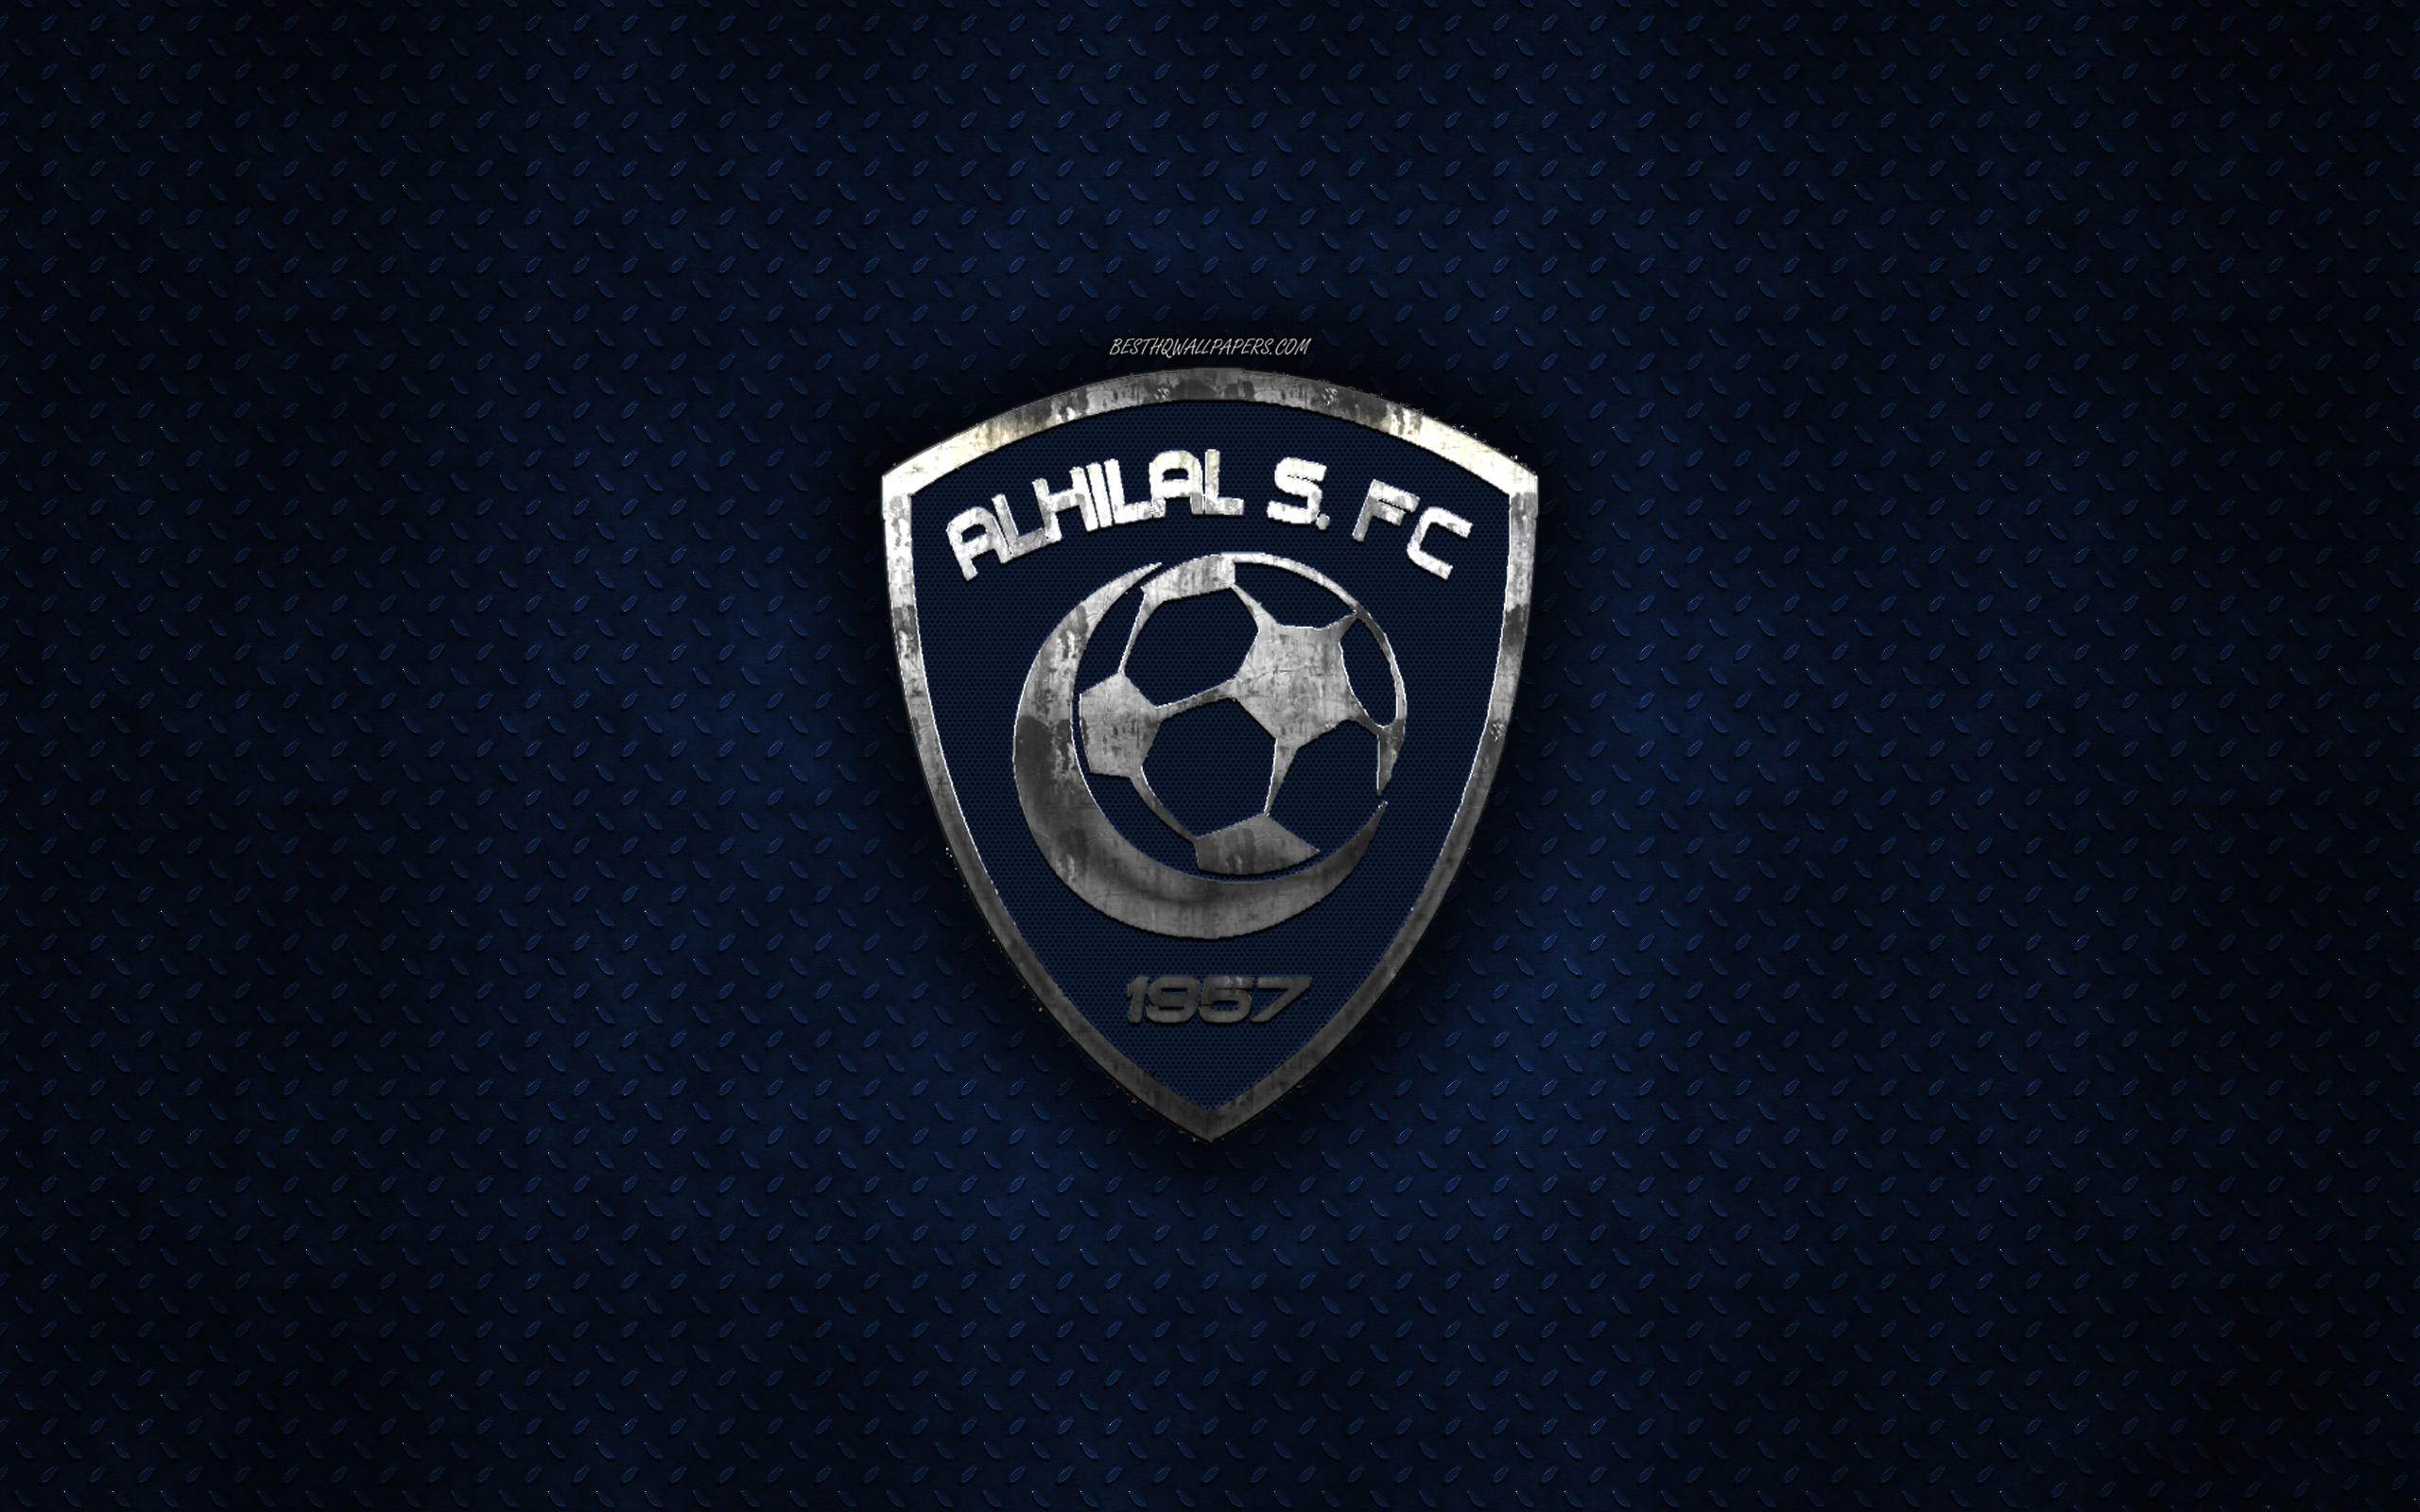 باشگاه فوتبال الهلال (al hilal club)